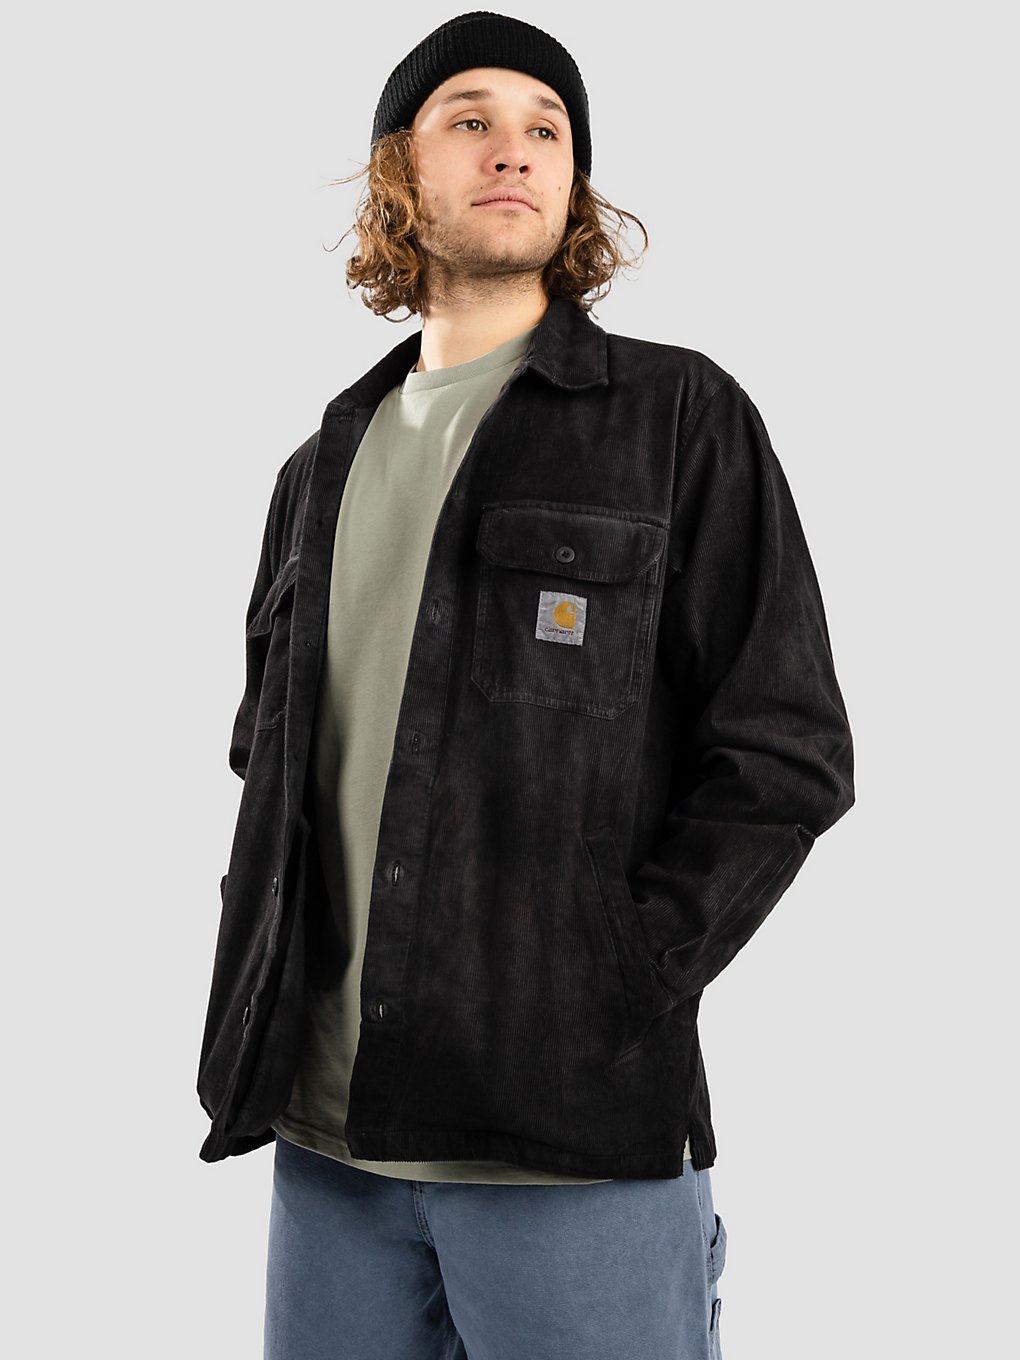 Carhartt WIP Dixon Chromo Shirt Jacke black chromo kaufen